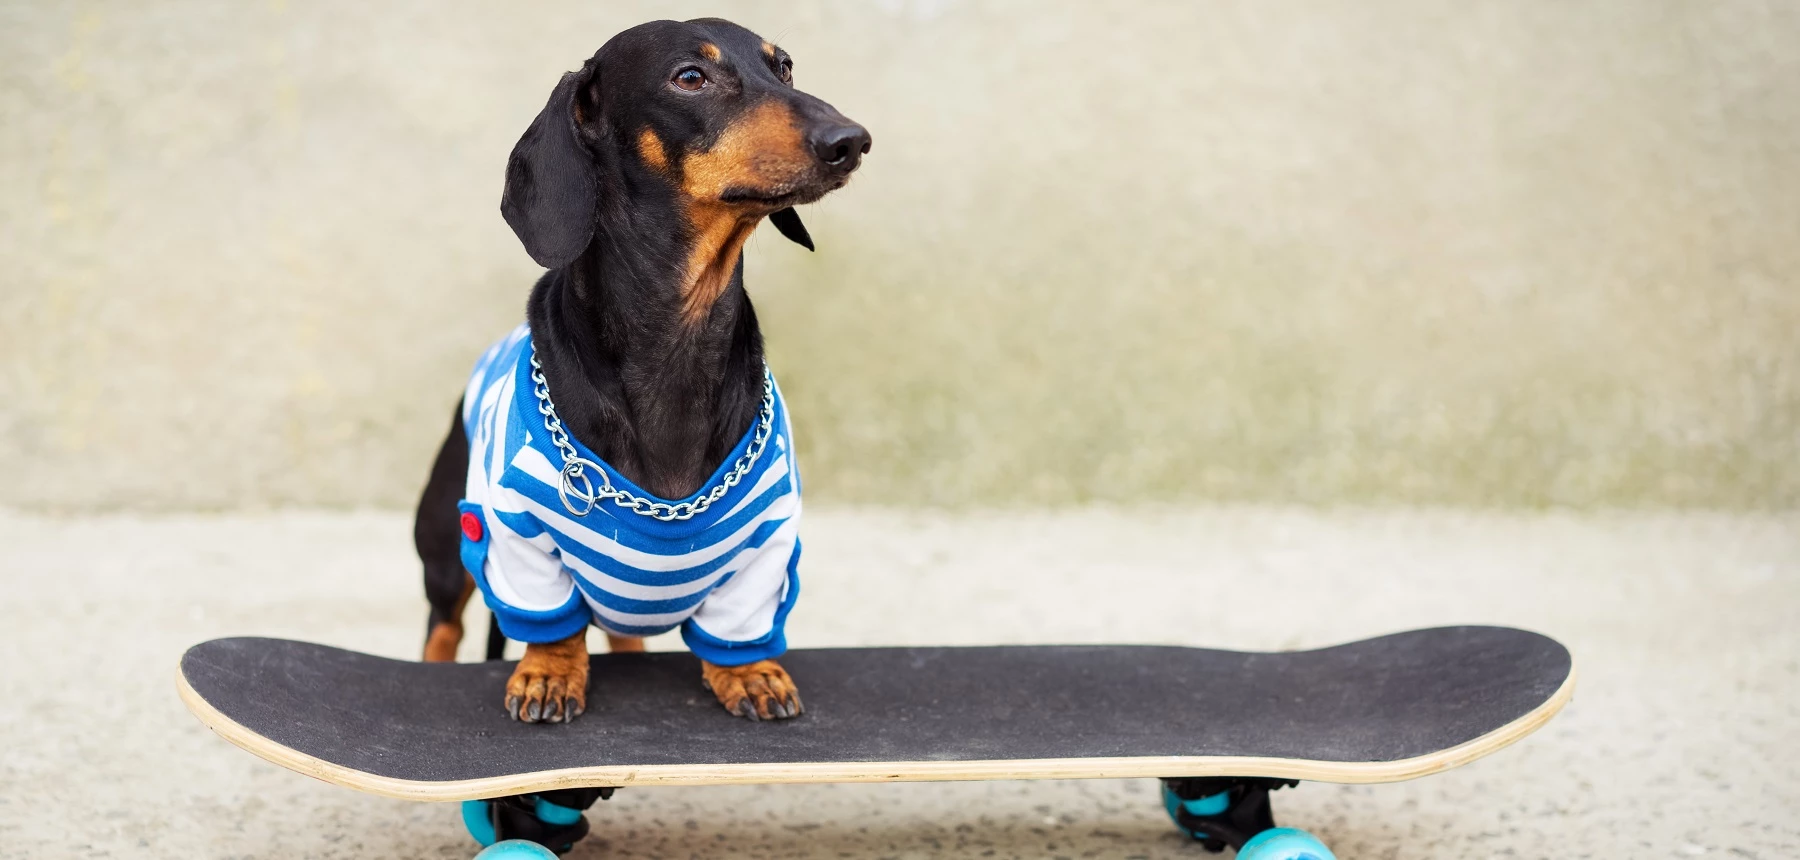 Hond op skateboard